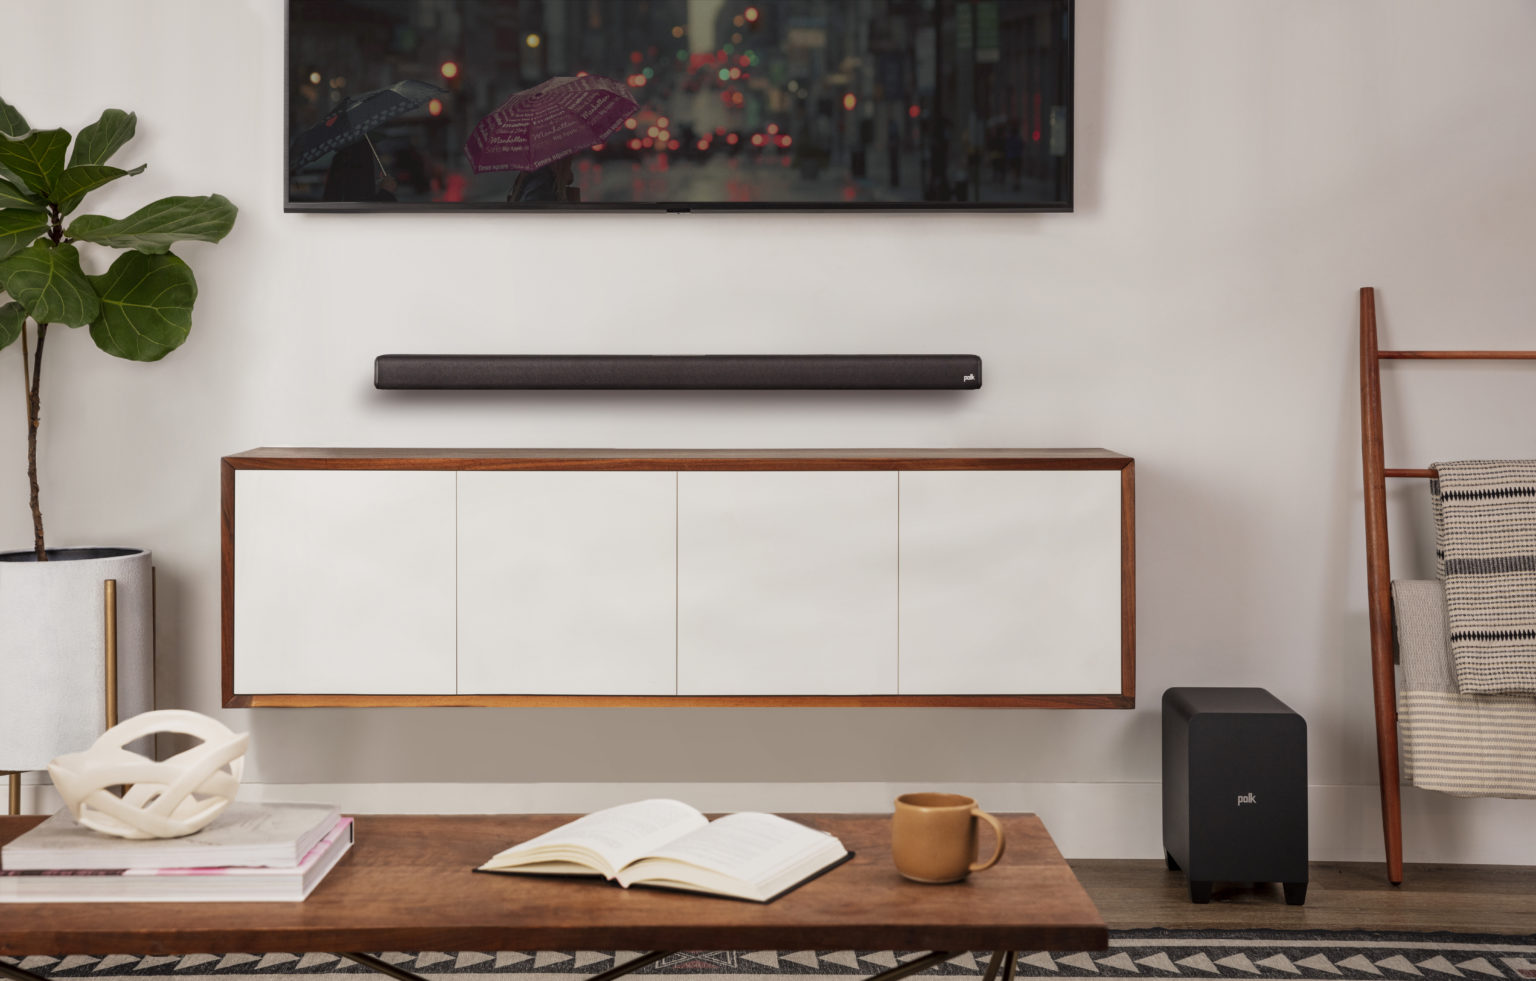 Polk Audio Introduces Its First Dolby Atmos Soundbar System